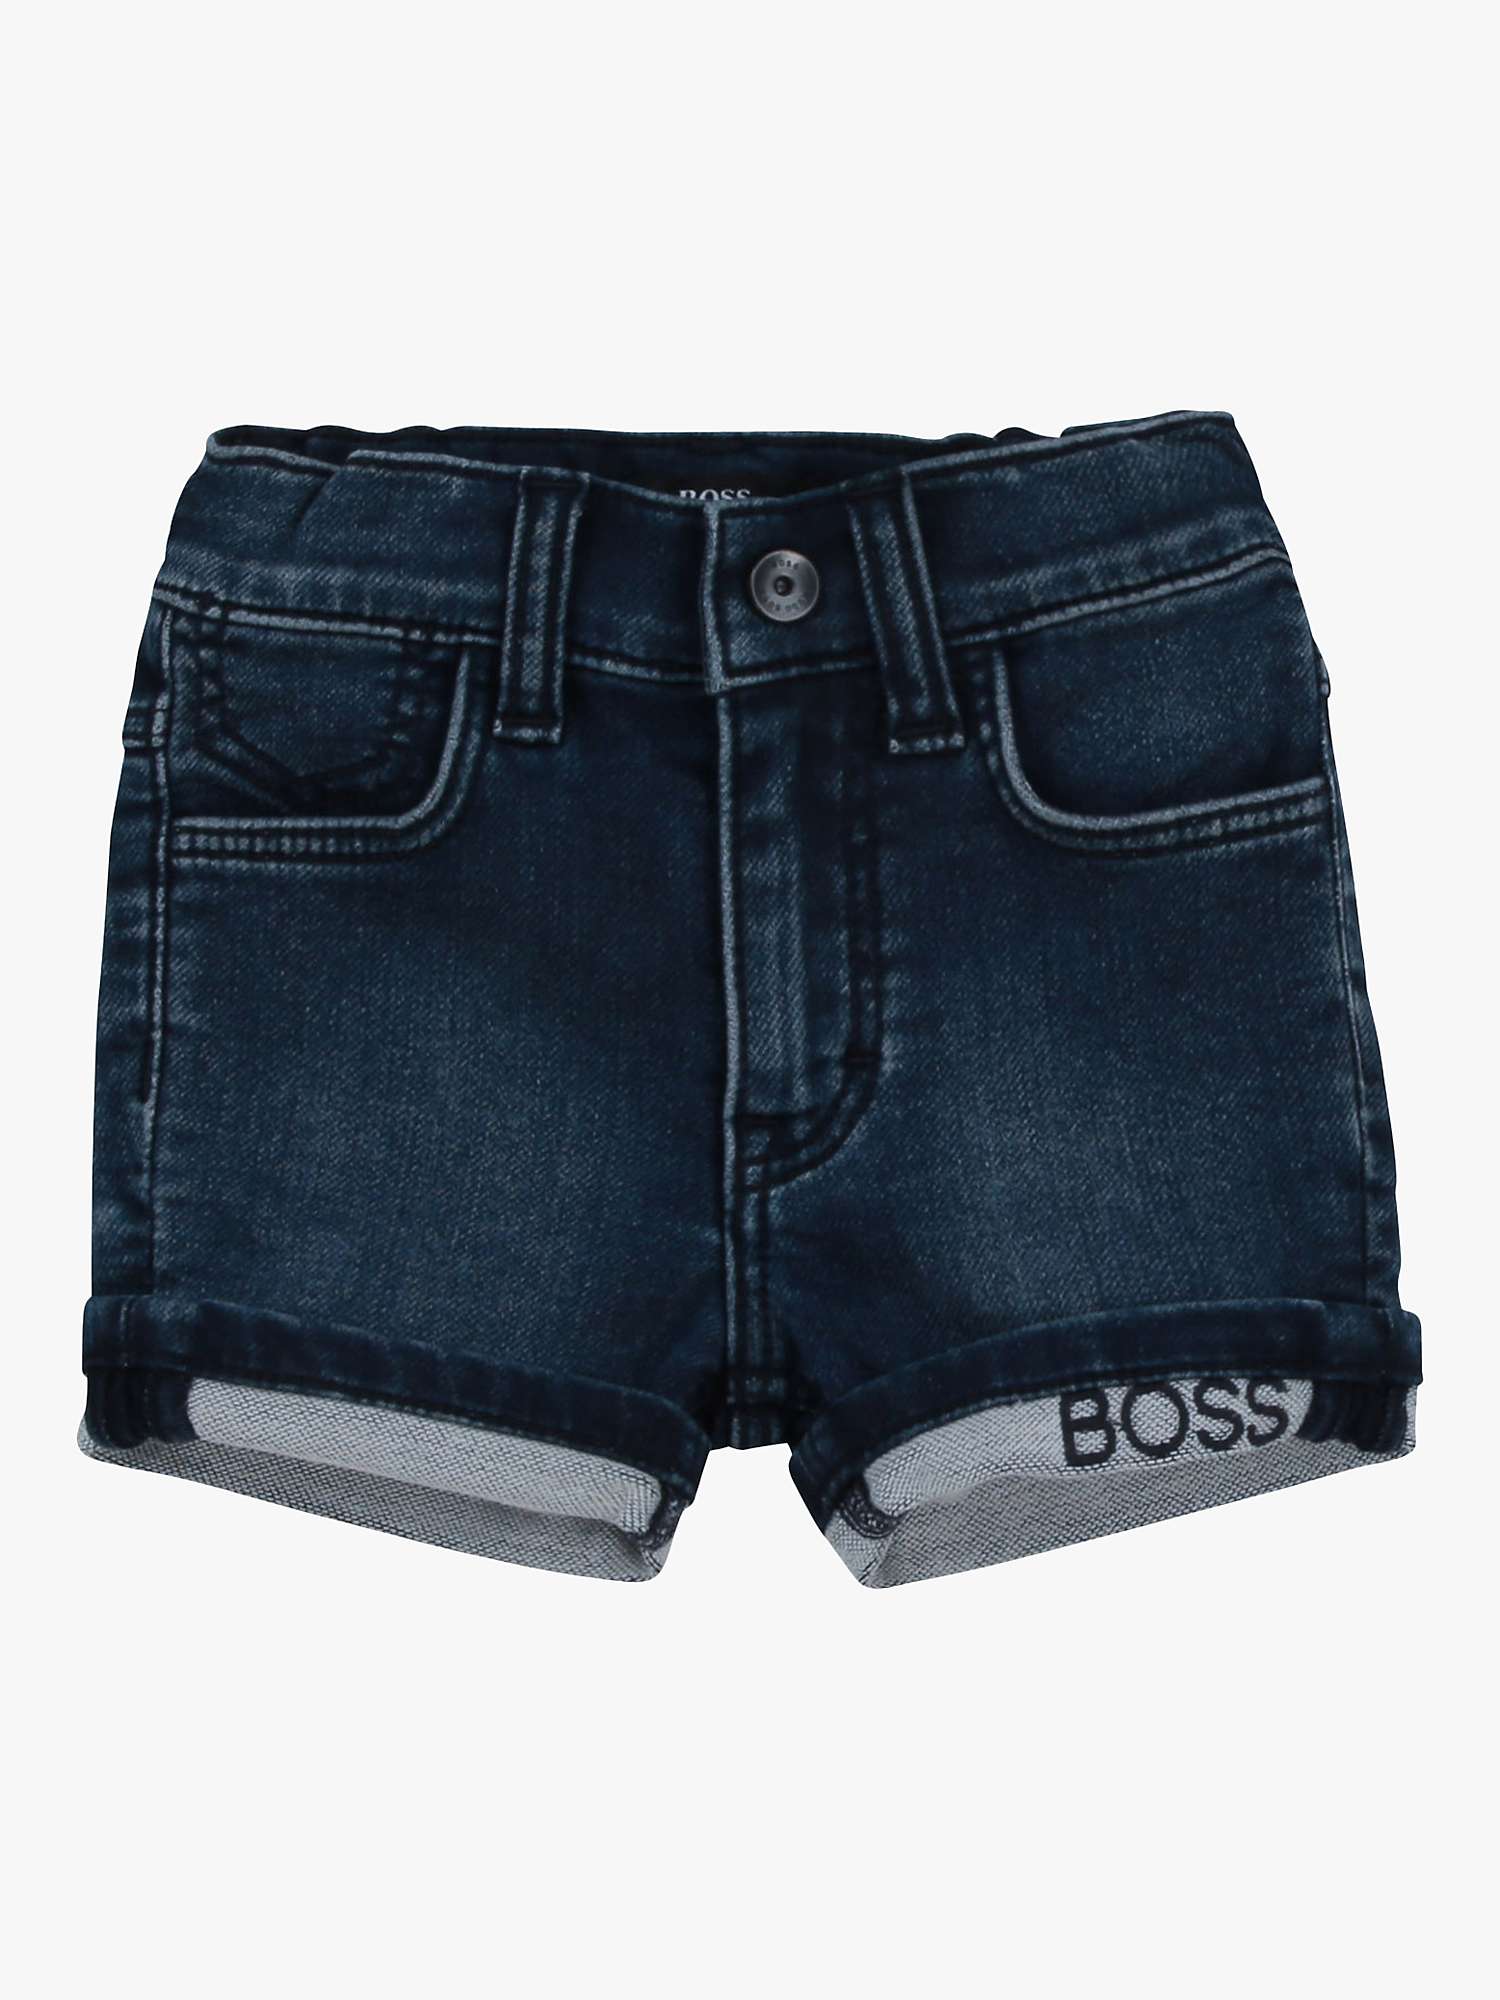 Buy HUGO BOSS Baby Denim Bermuda Shorts, Stone Online at johnlewis.com